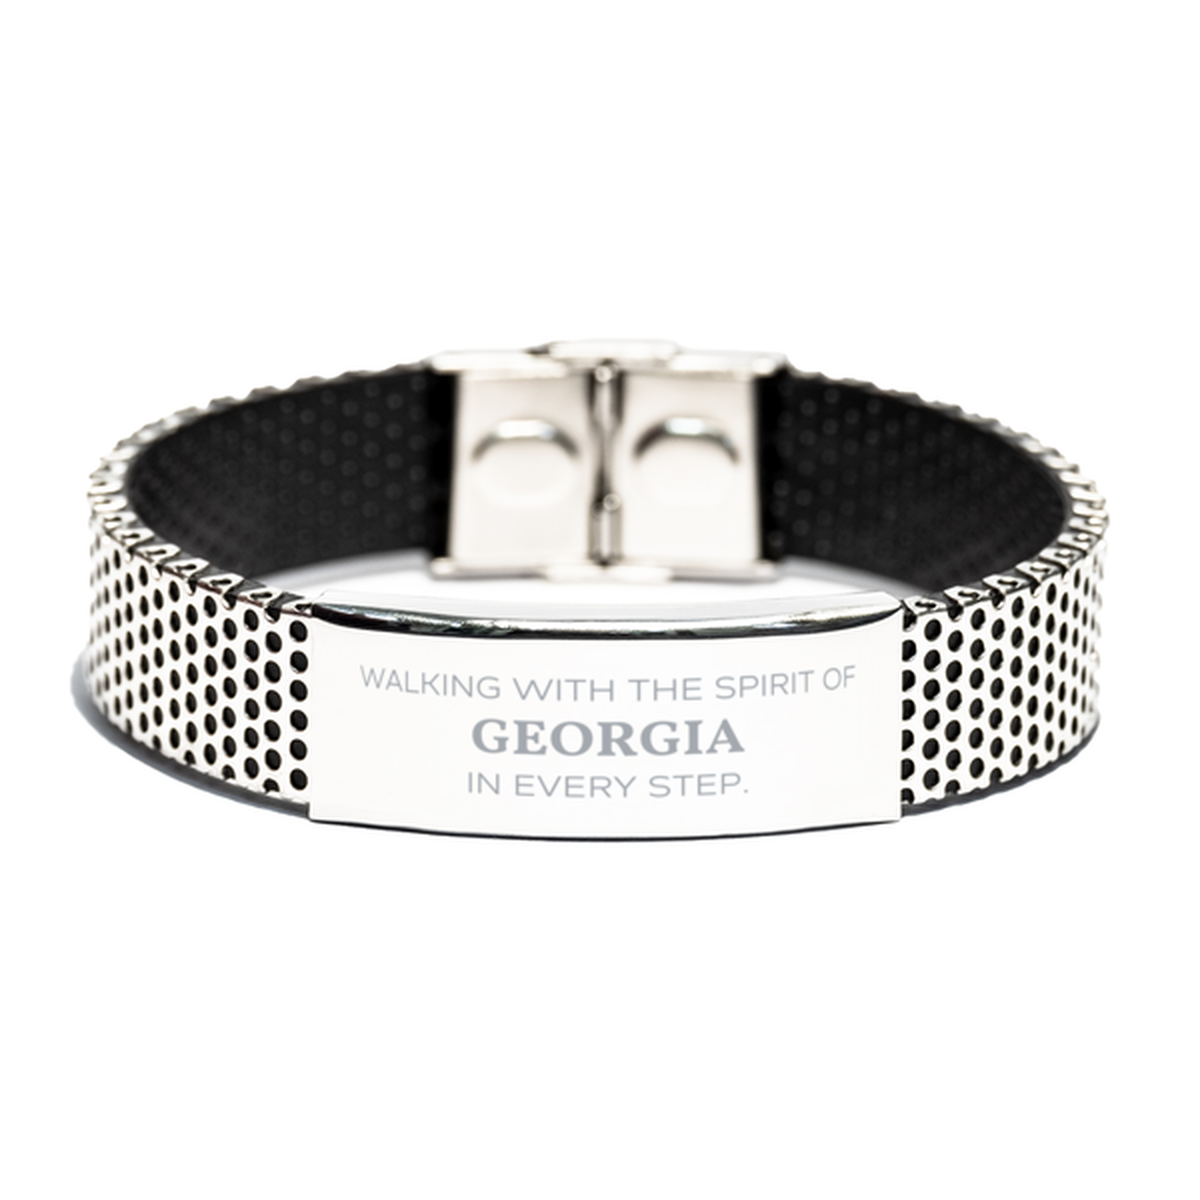 Georgia Gifts, Walking with the spirit, Love Georgia Birthday Christmas Stainless Steel Bracelet For Georgia People, Men, Women, Friends